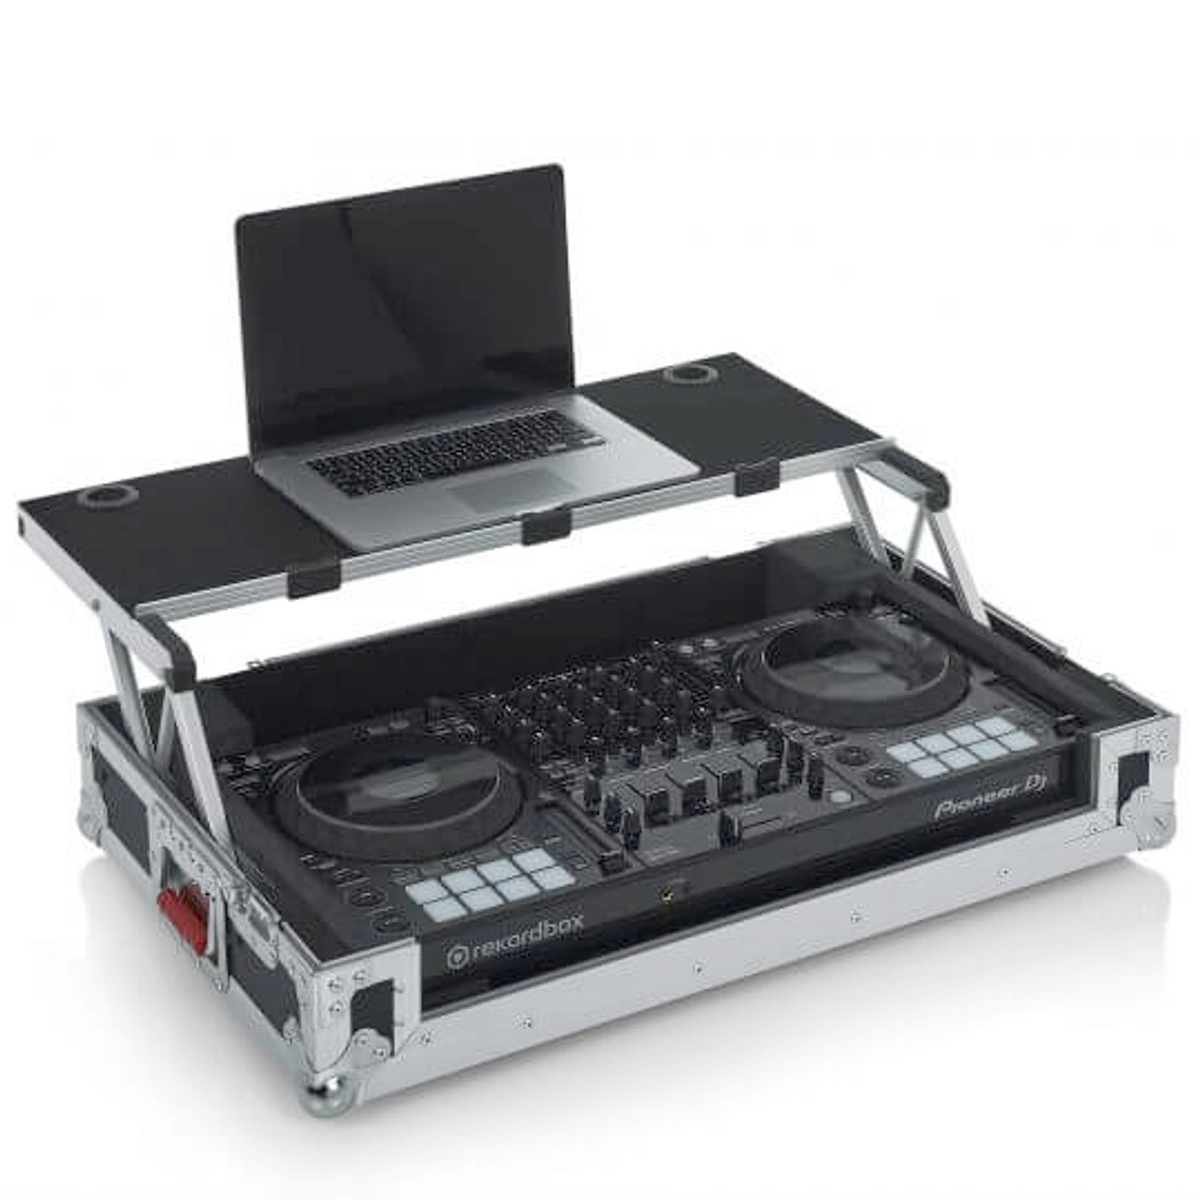 Gator GTOURDSPDDJ1000 DJ Controller Case for Pioneer SRT-1000 Controller